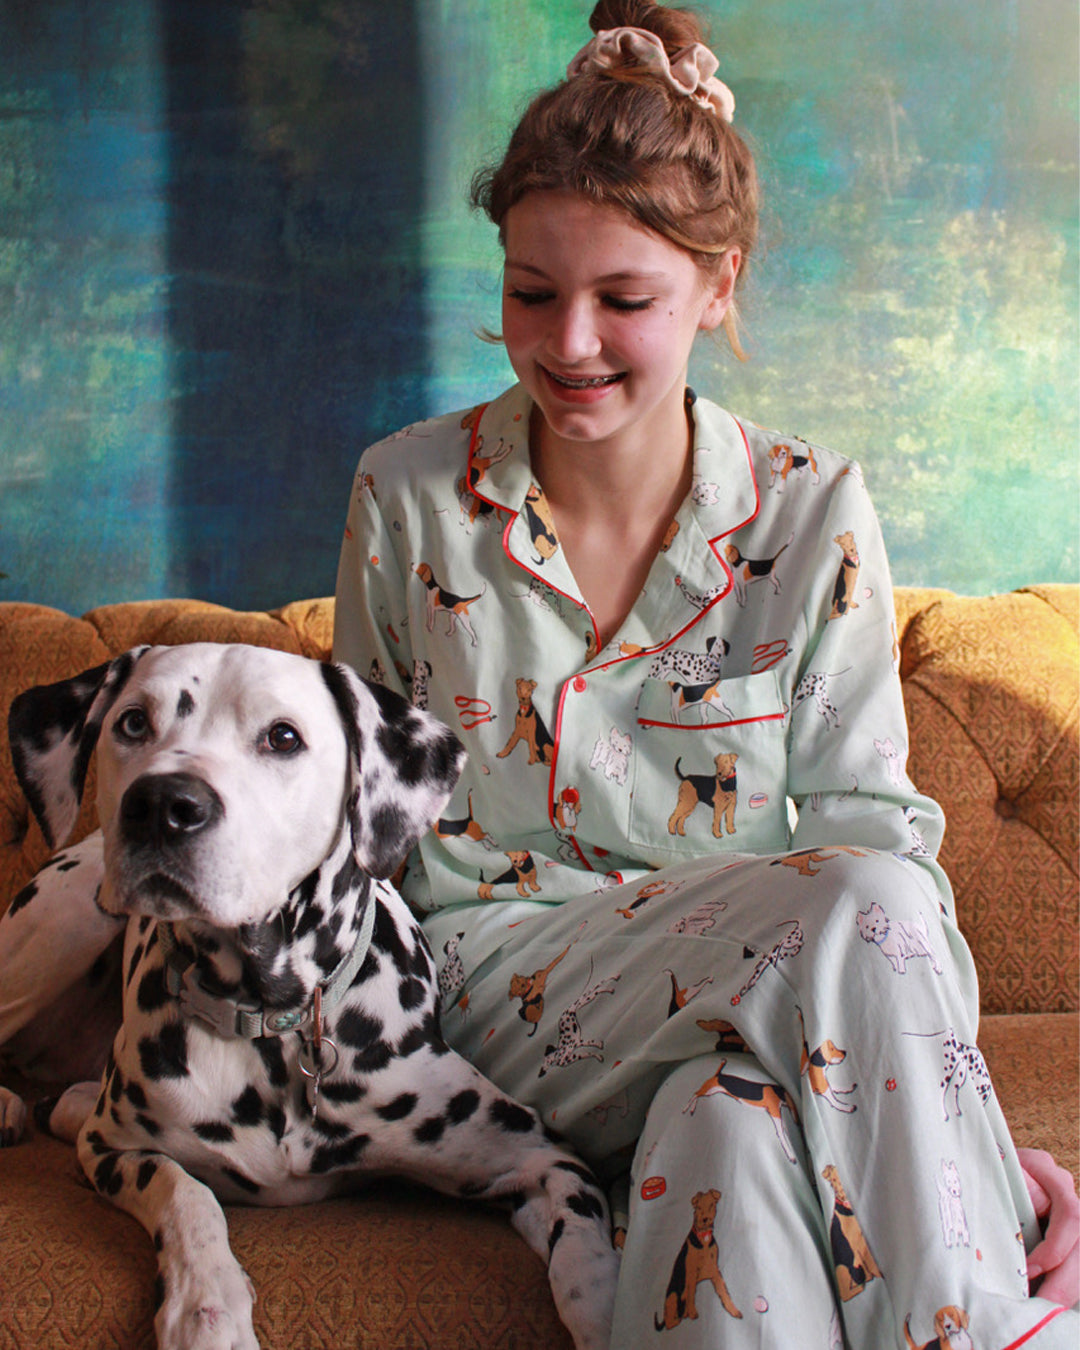 Imogen and buddy the Dalmatian wearing Tessie Clothing poppy dog print pyjamas set. 3 Dalmatian facts